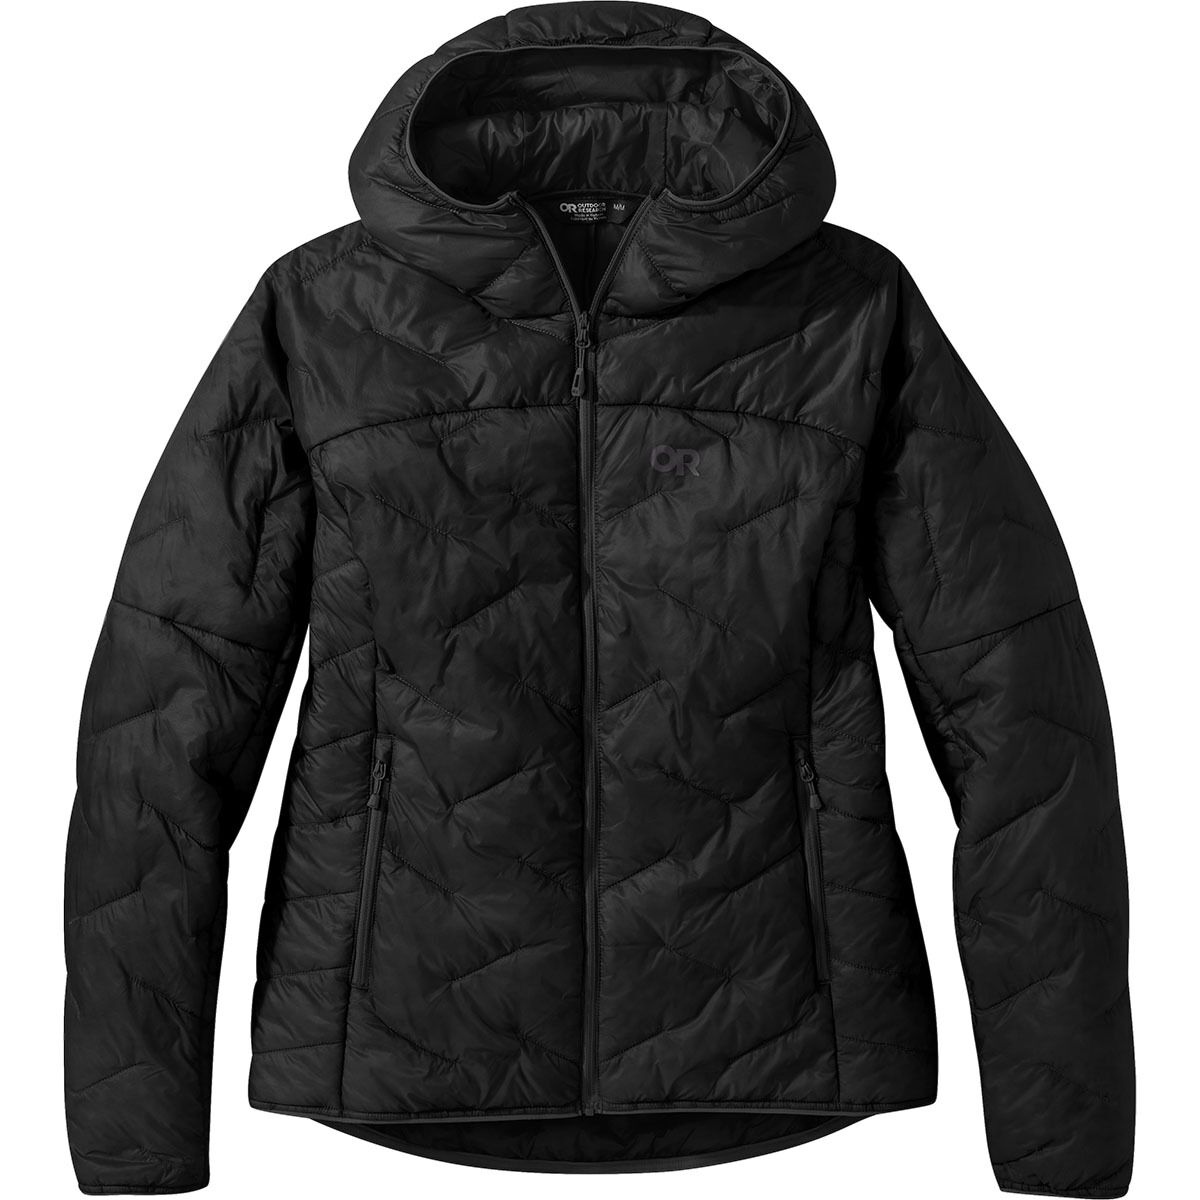 SuperStrand LT Plus Size Hooded Jacket - Women